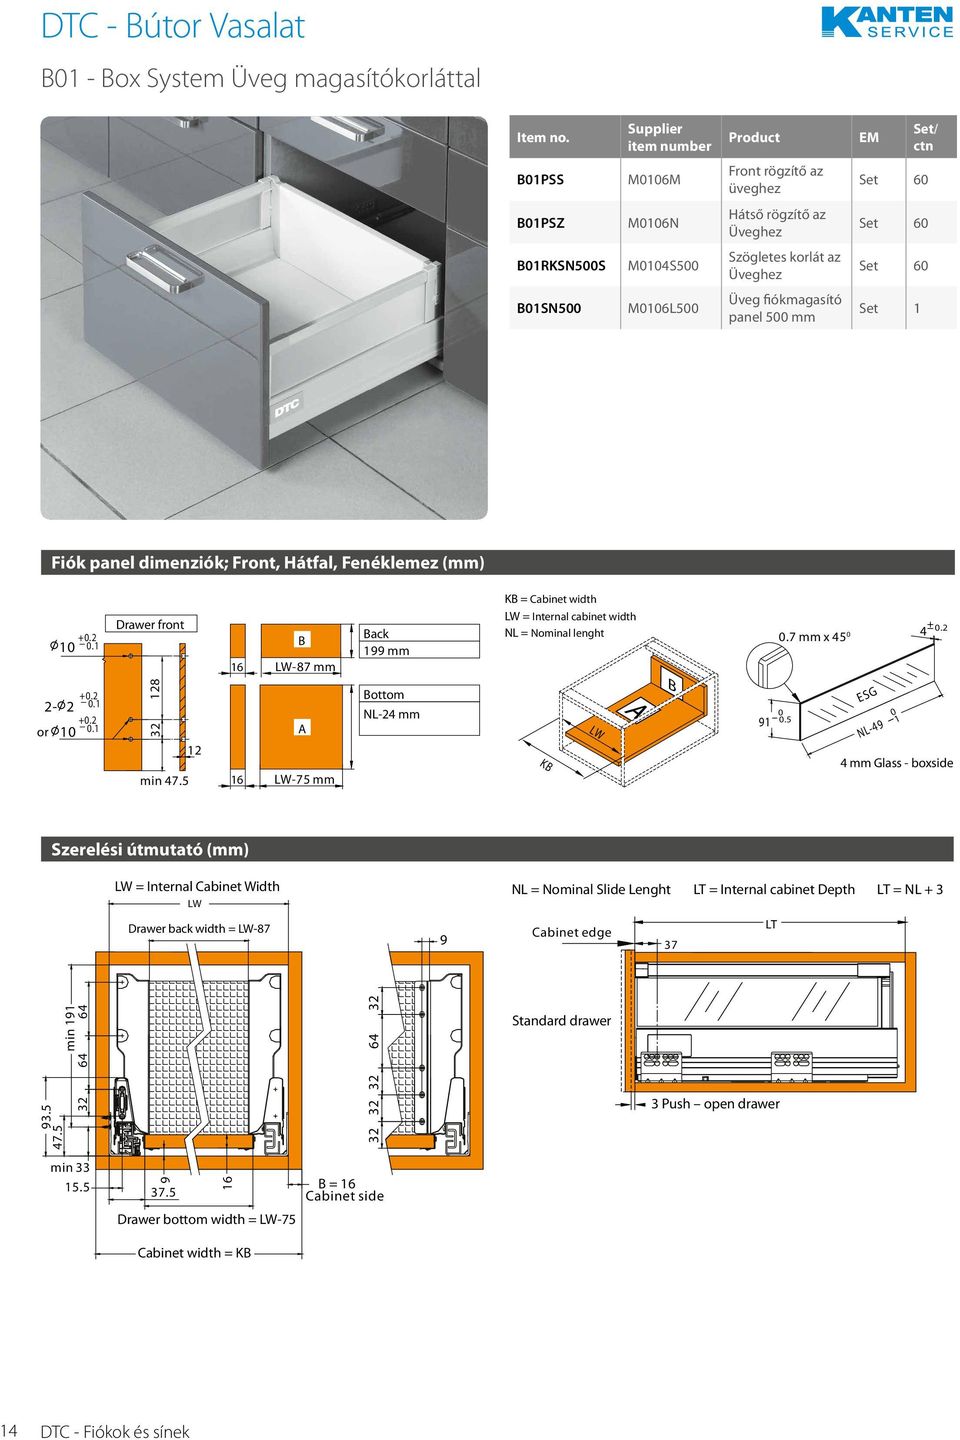 2 ESG NL-4 1 4 mm Glass - boxside Szerelési útmutató (mm) LW = Internal Cabinet Width LW NL = Nominal Slide Lenght LT = Internal cabinet Depth LT = NL + 3 Drawer back width = LW-87 Cabinet edge LT